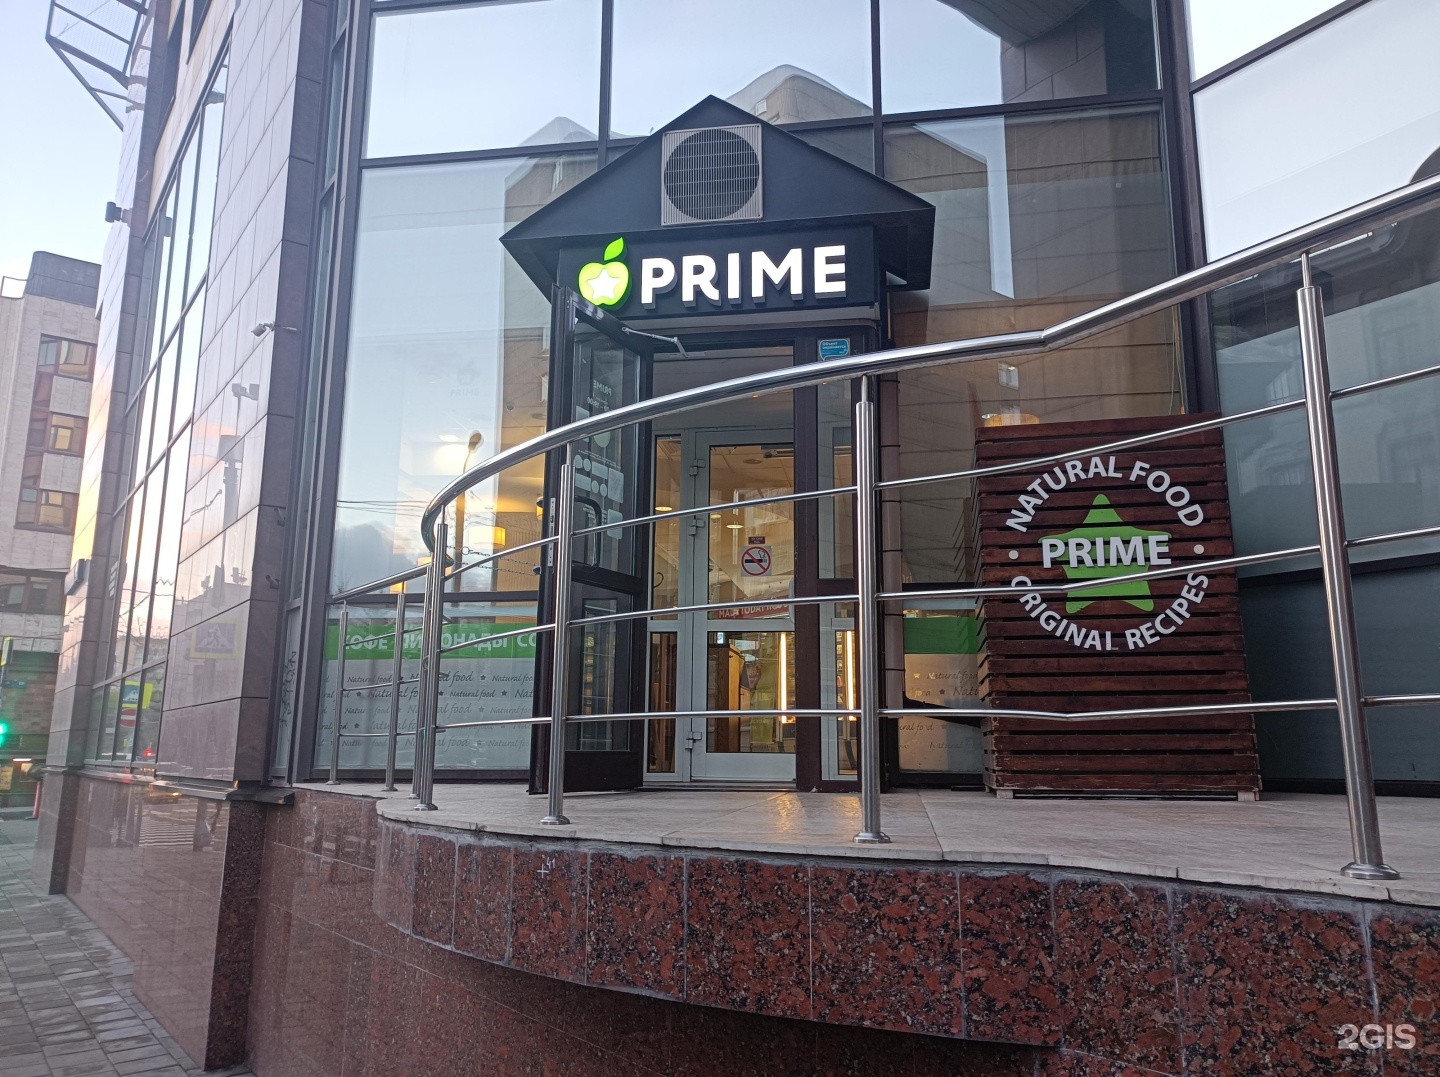 Prime кафе. Сеть кафе Prime. Prime Cafe Марксистская. Prime Cafe чистые пруды.